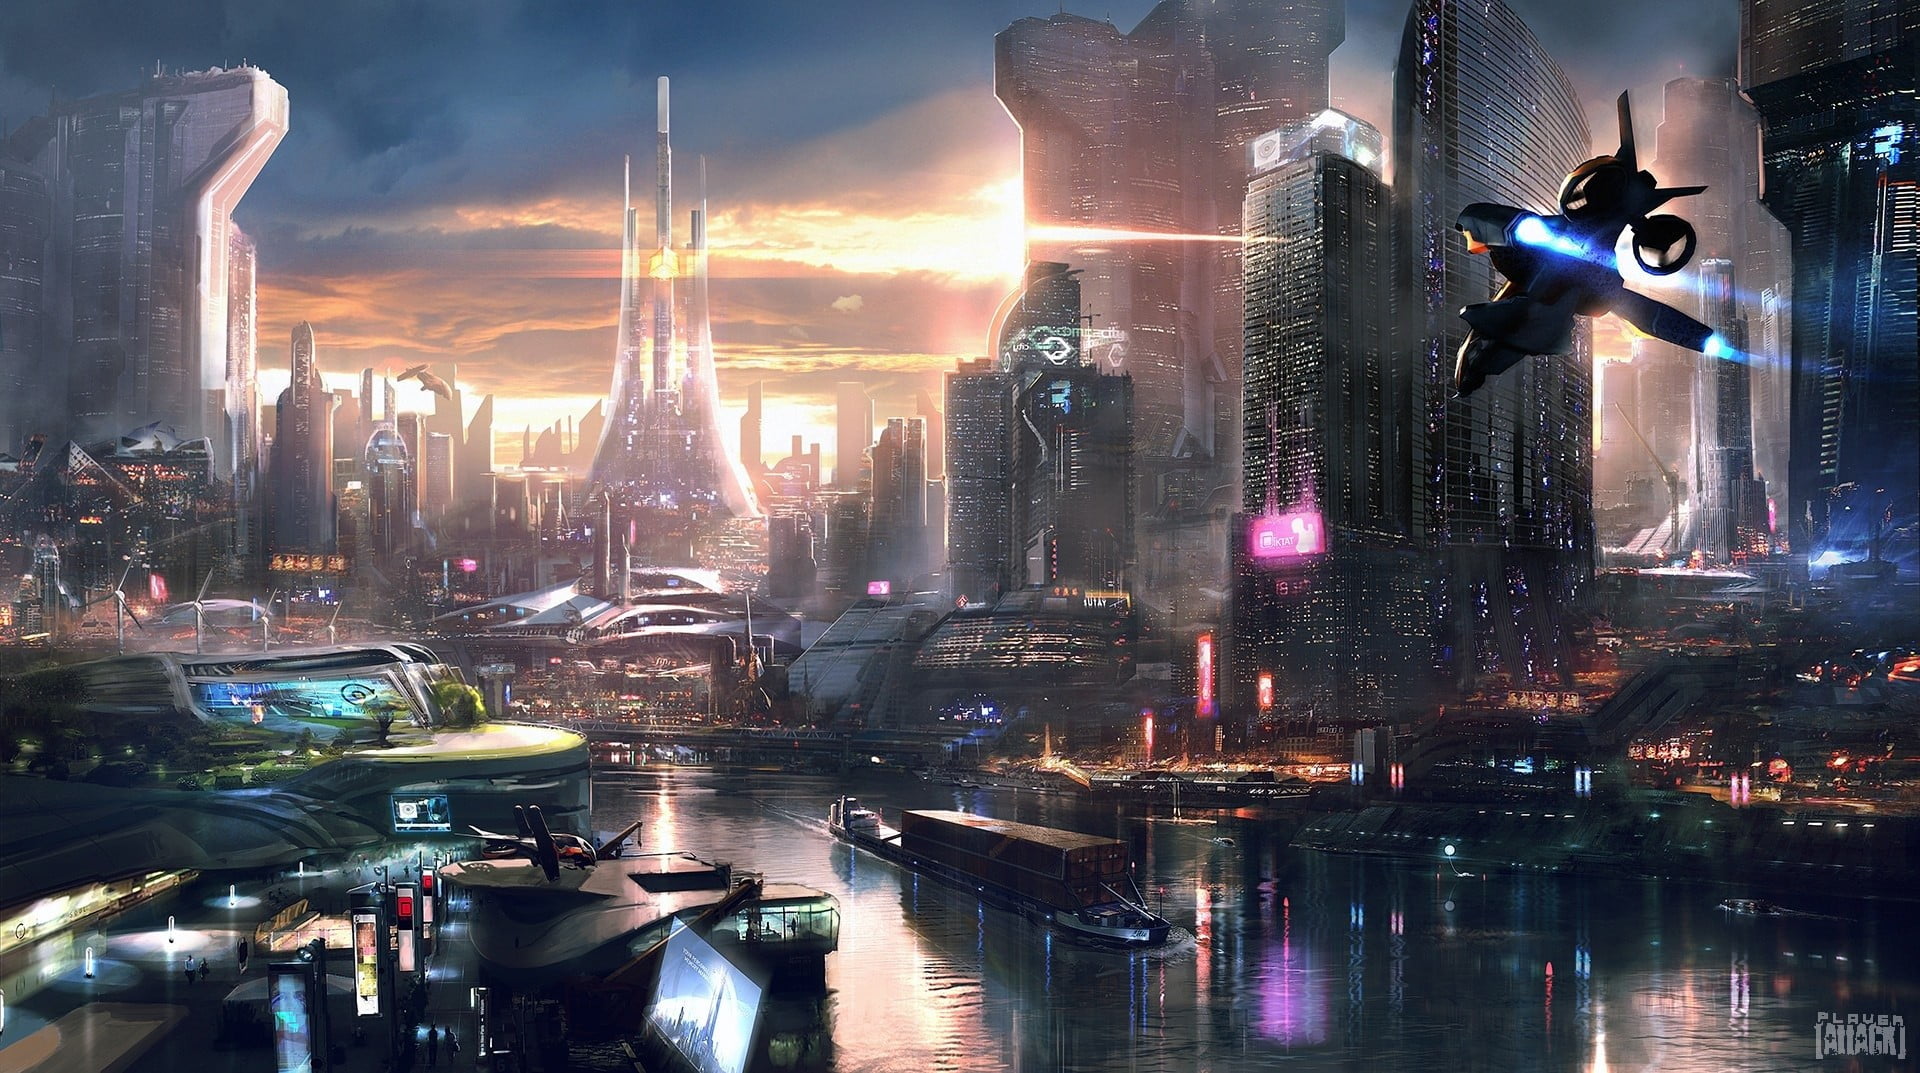 Sci-Fi city digital wallpaper, cyberpunk, science fiction, futuristic